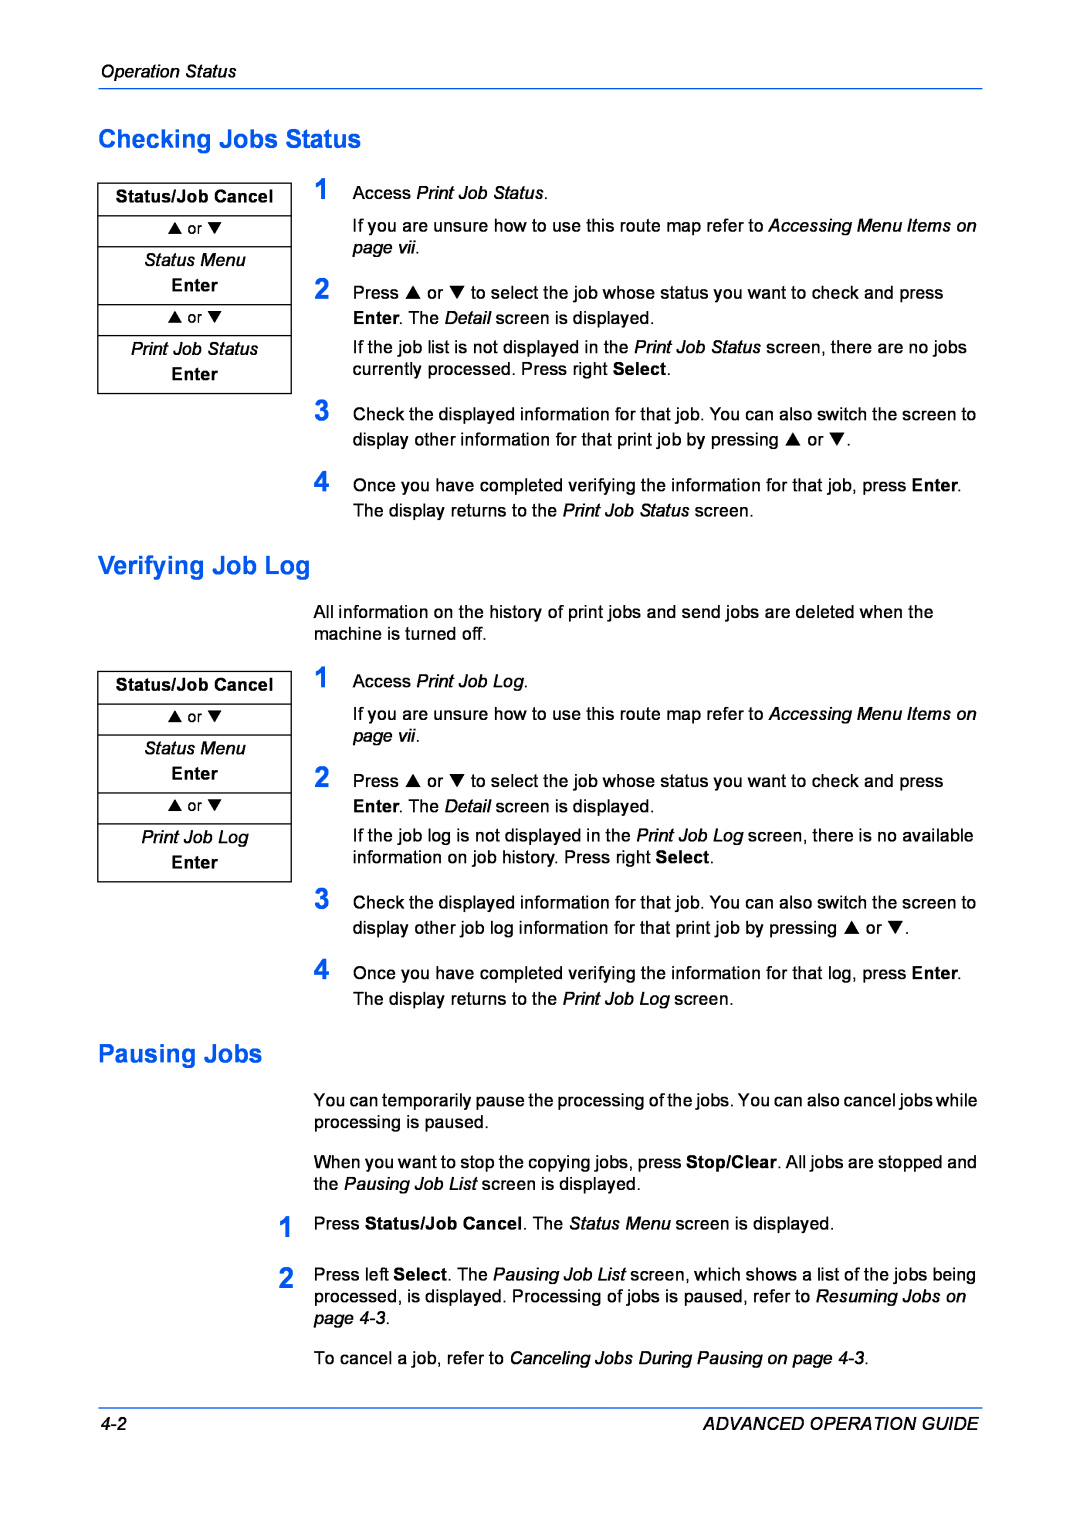 Kyocera KM-1820 manual Checking Jobs Status, Verifying Job Log, Pausing Jobs, Print Job Status 